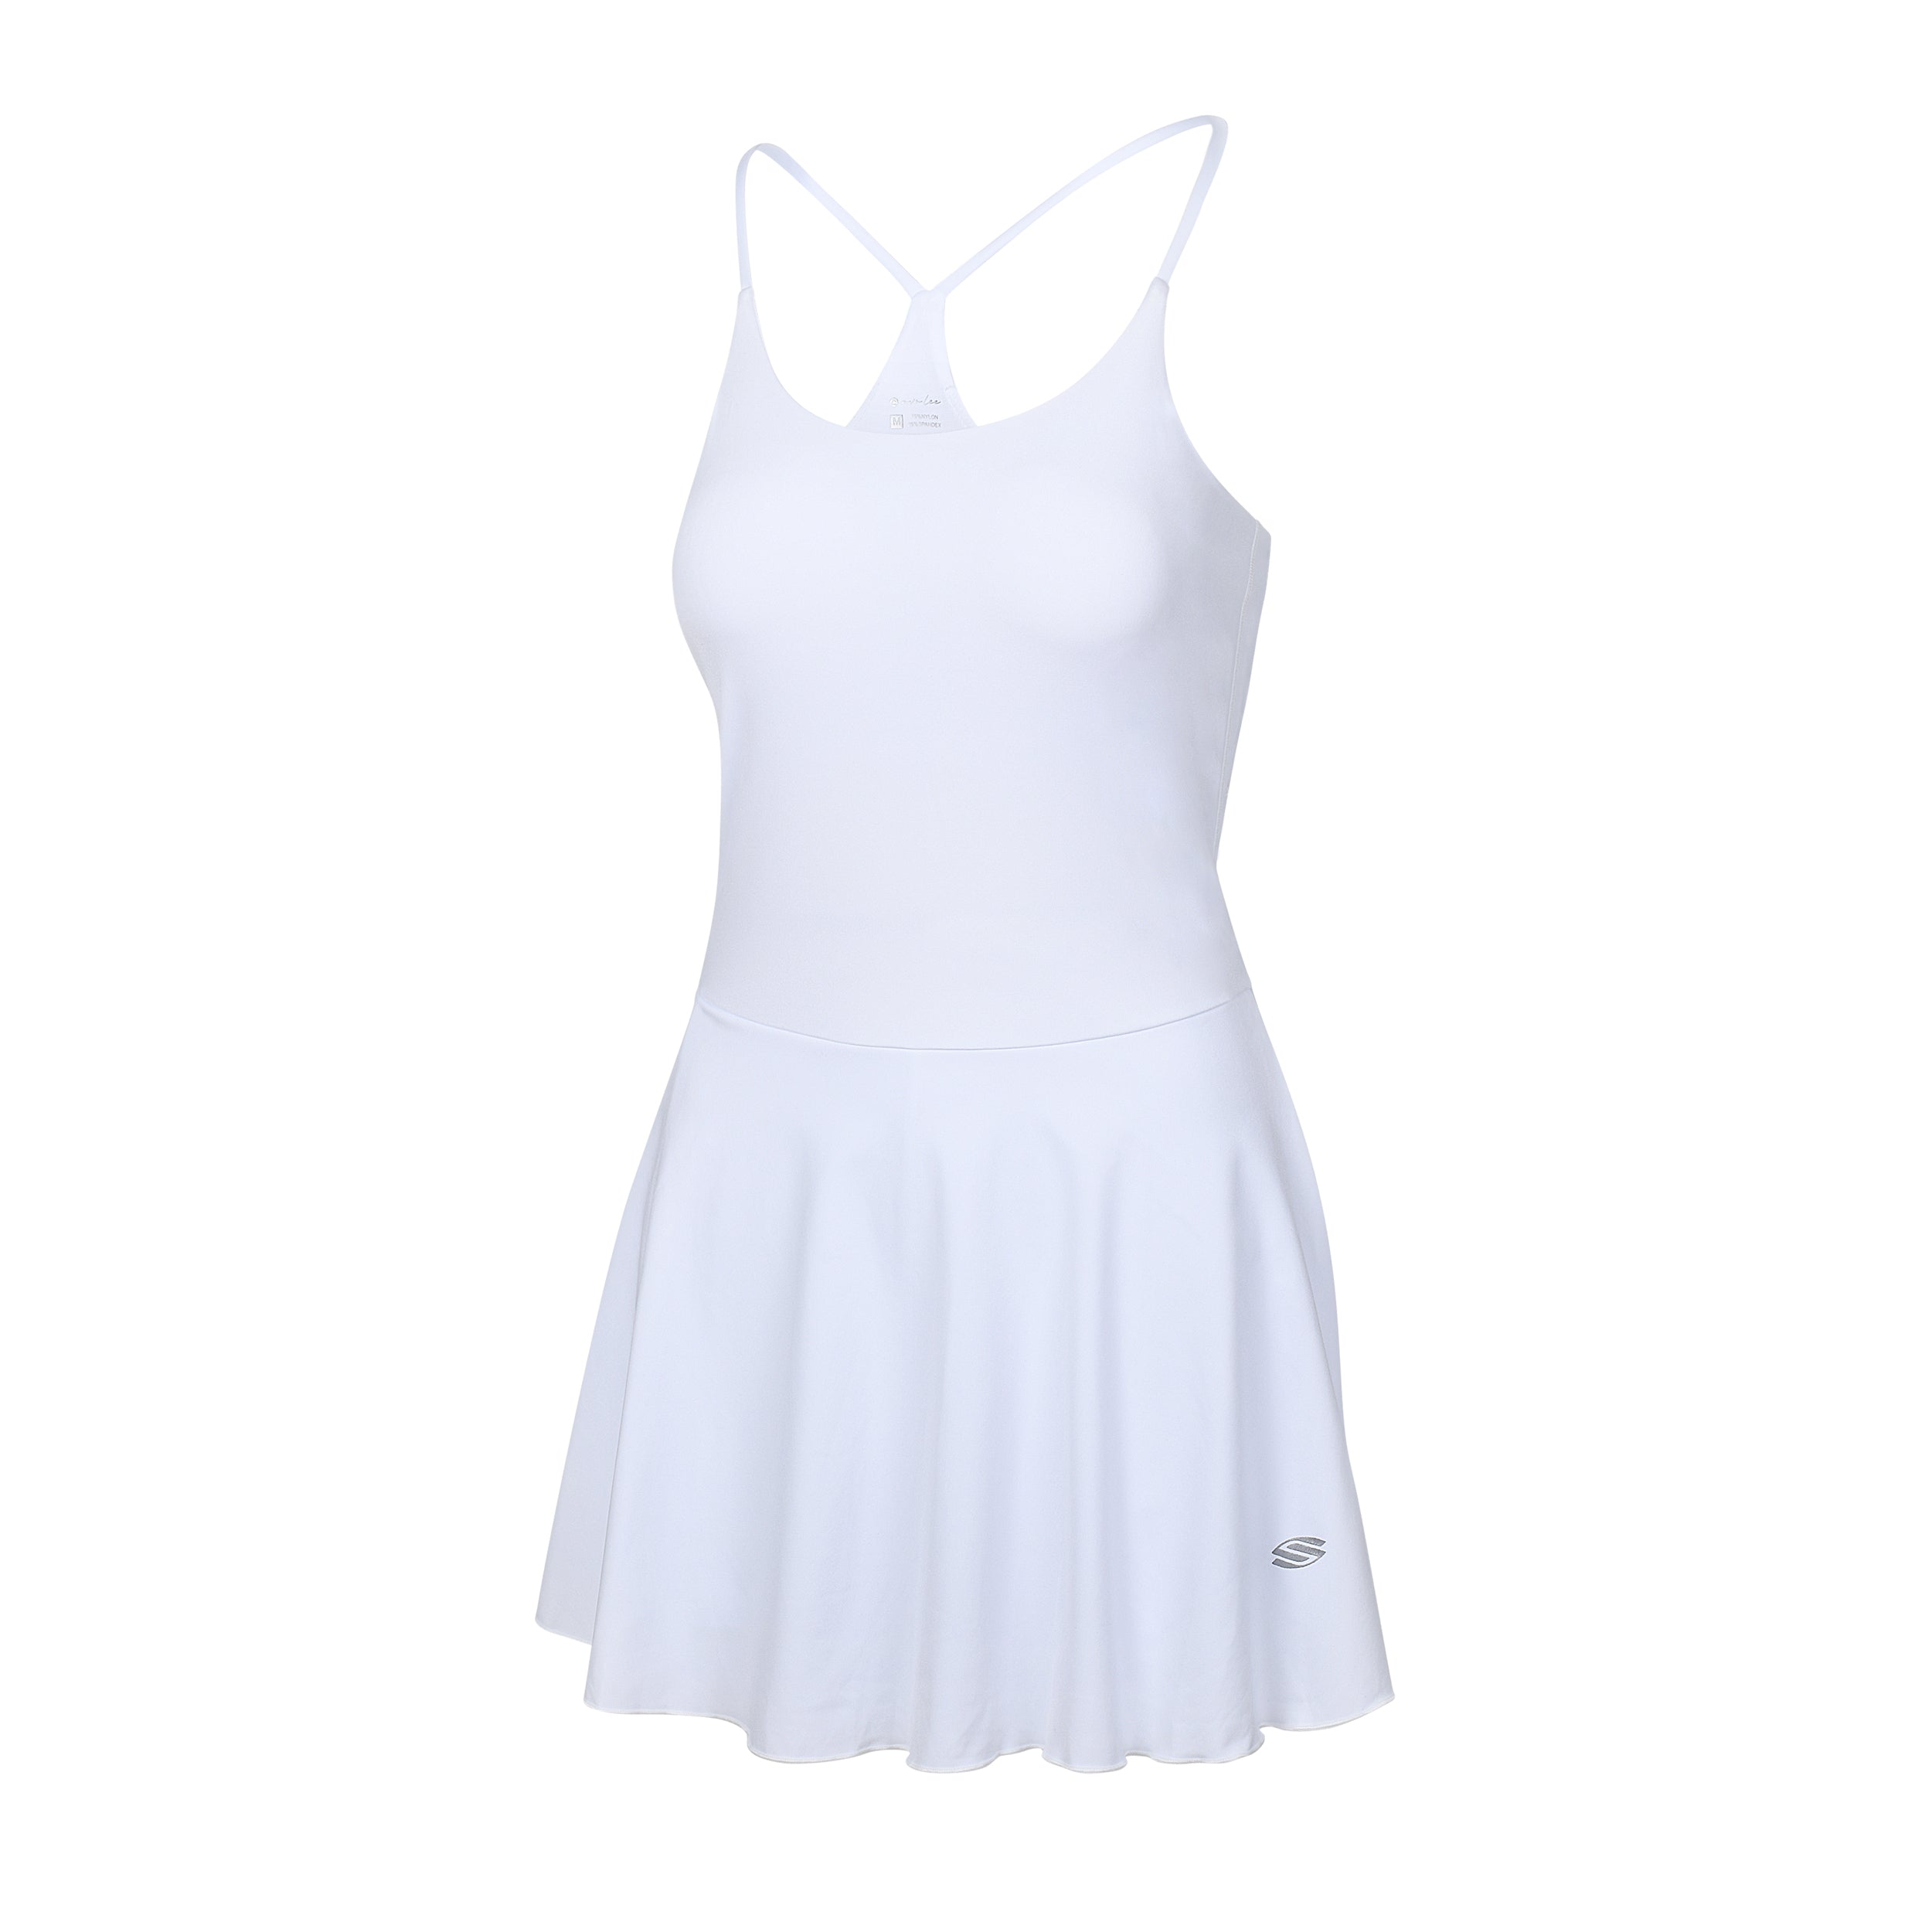 White AvaLee by Selkirk Women's Single-Strap Court Dress